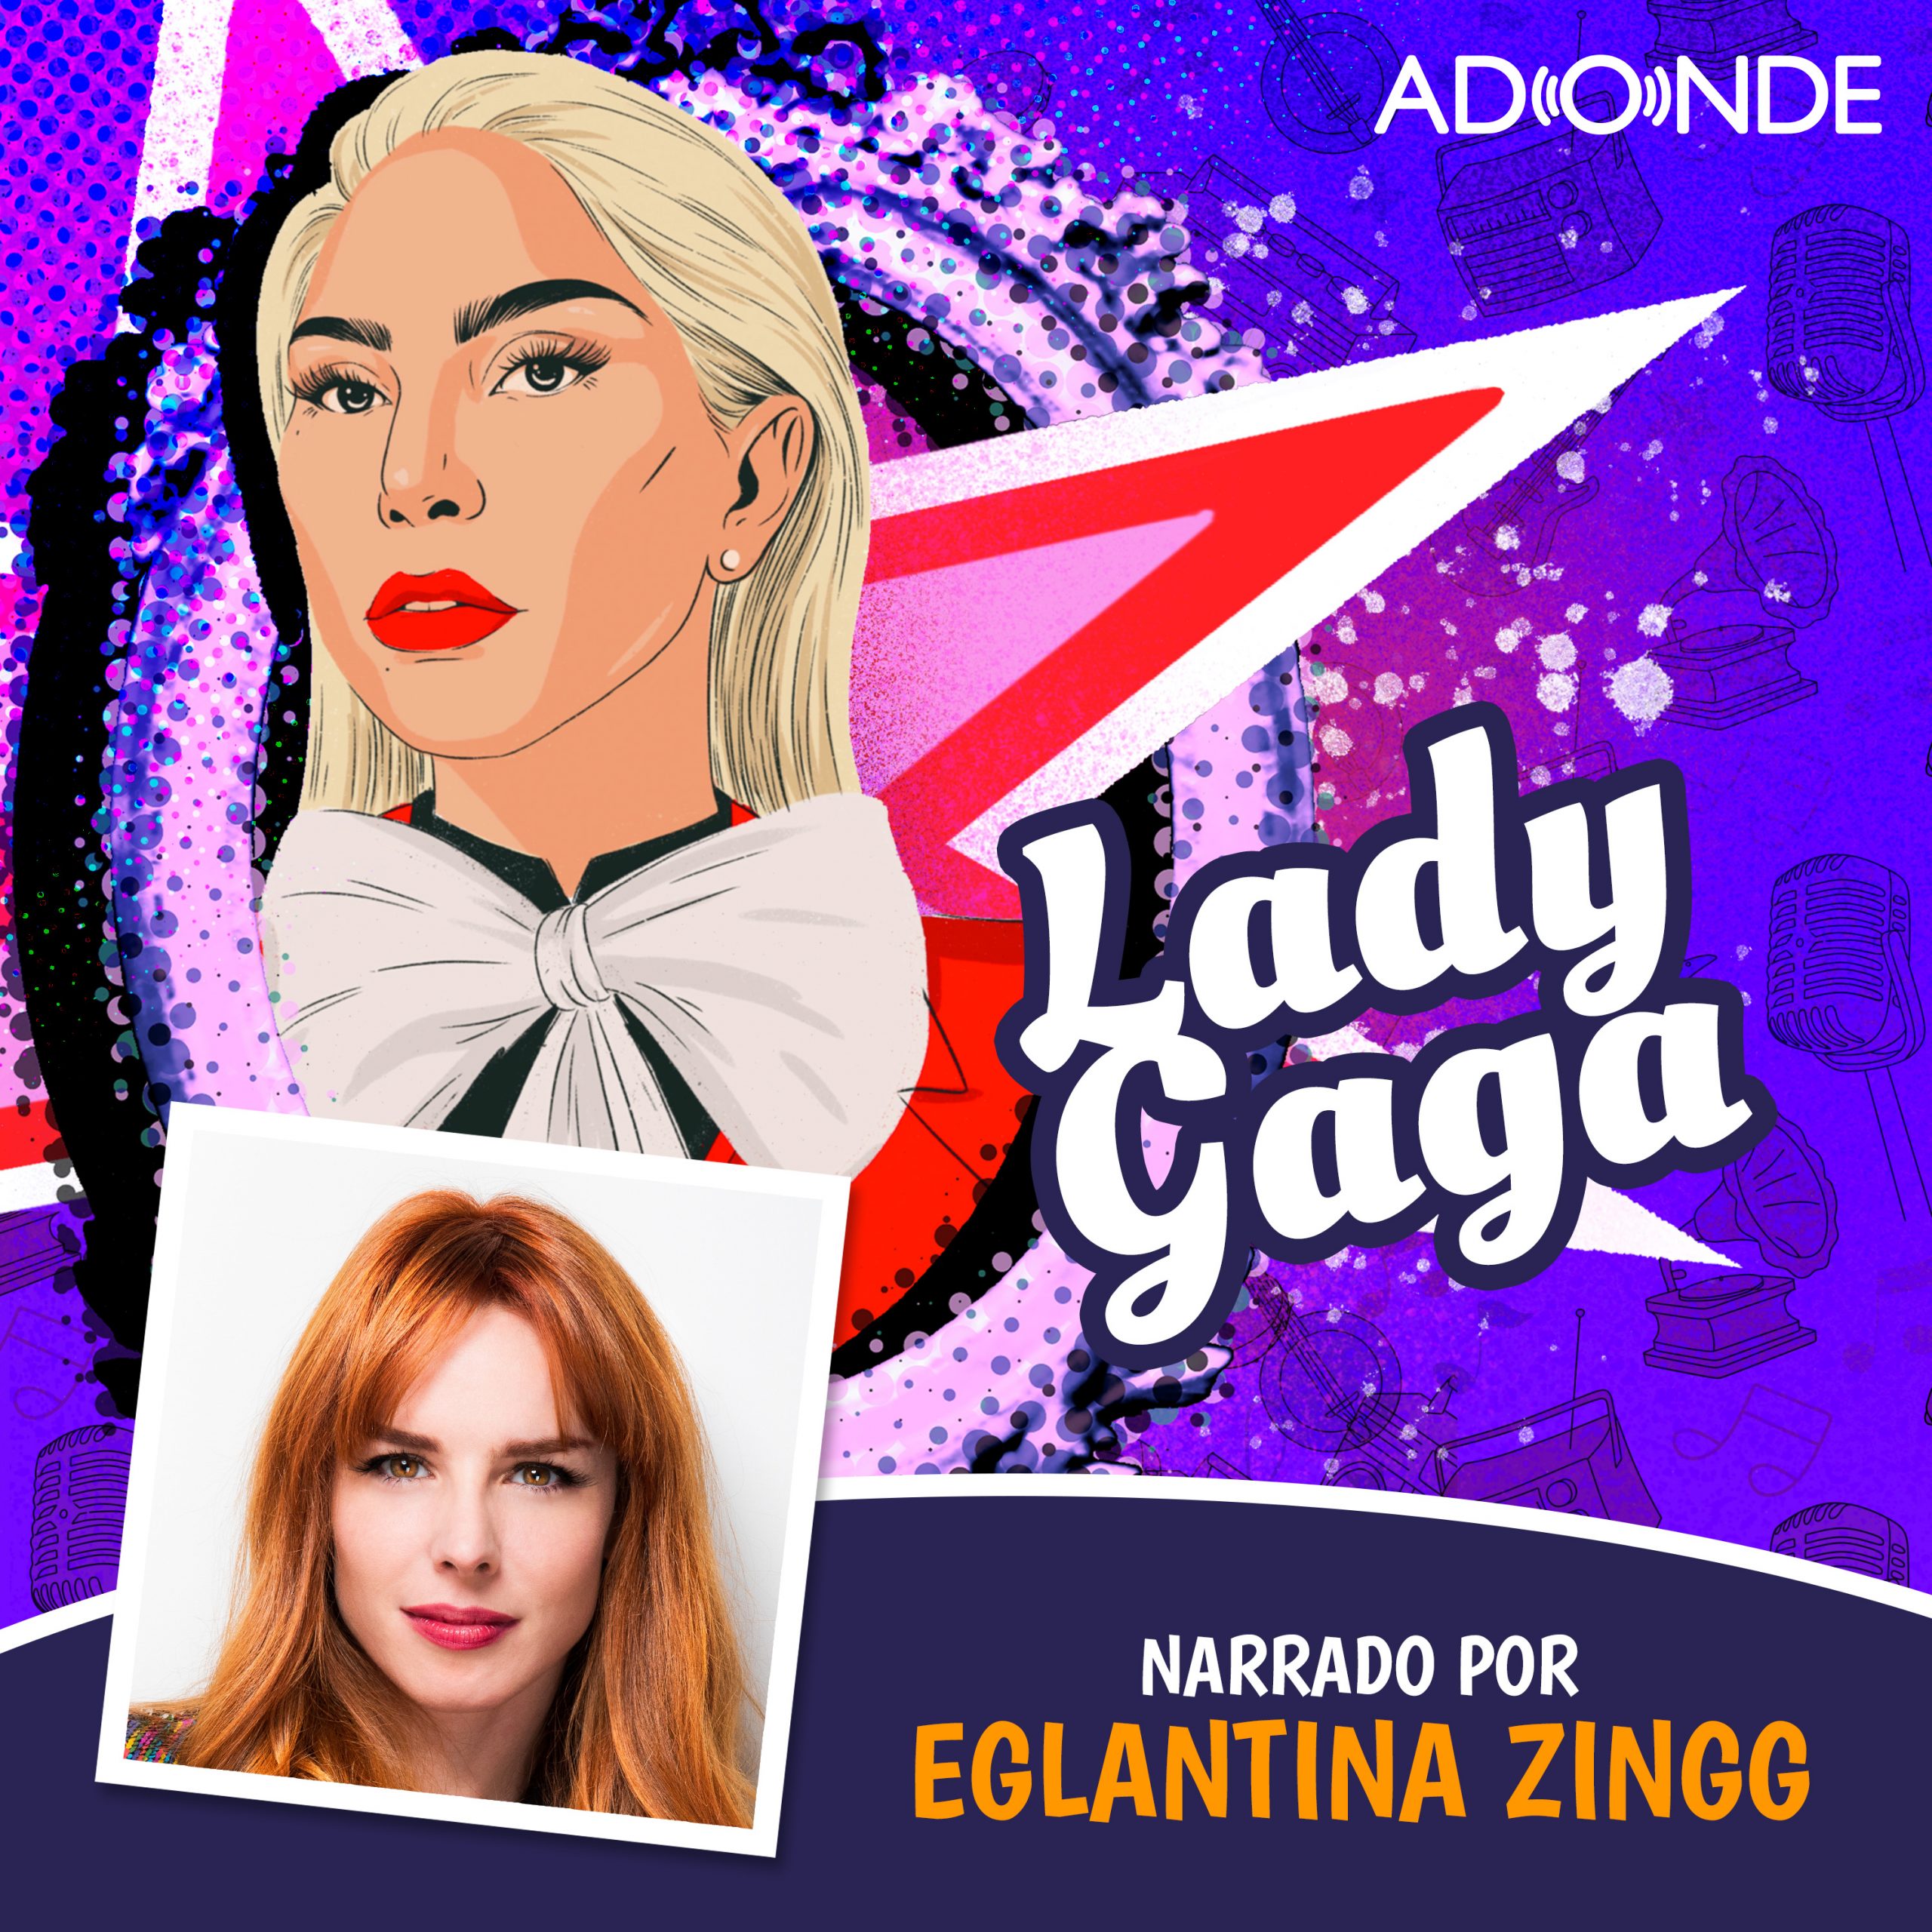 Ninas Rebeldes Podcast: Lady Gaga, narrado por Eglantina Zingg